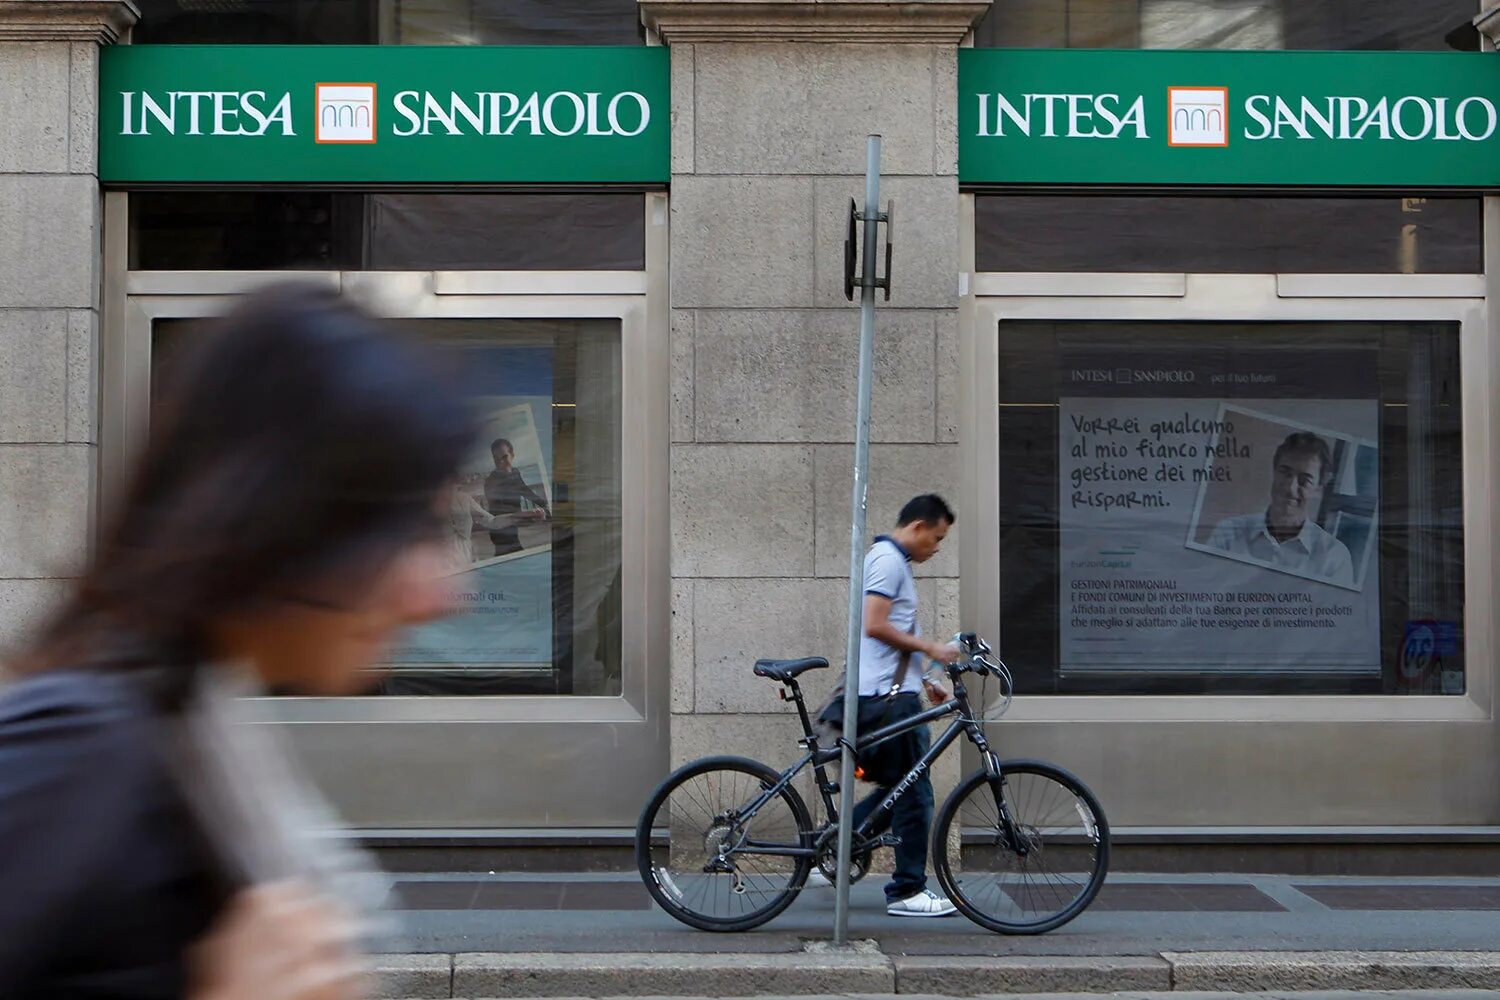 Banca intesa. Intesa Bank Italy. Интеза Санпаоло. Banca Intesa Sanpaolo приложение. Банк Интеза в Италии фото.